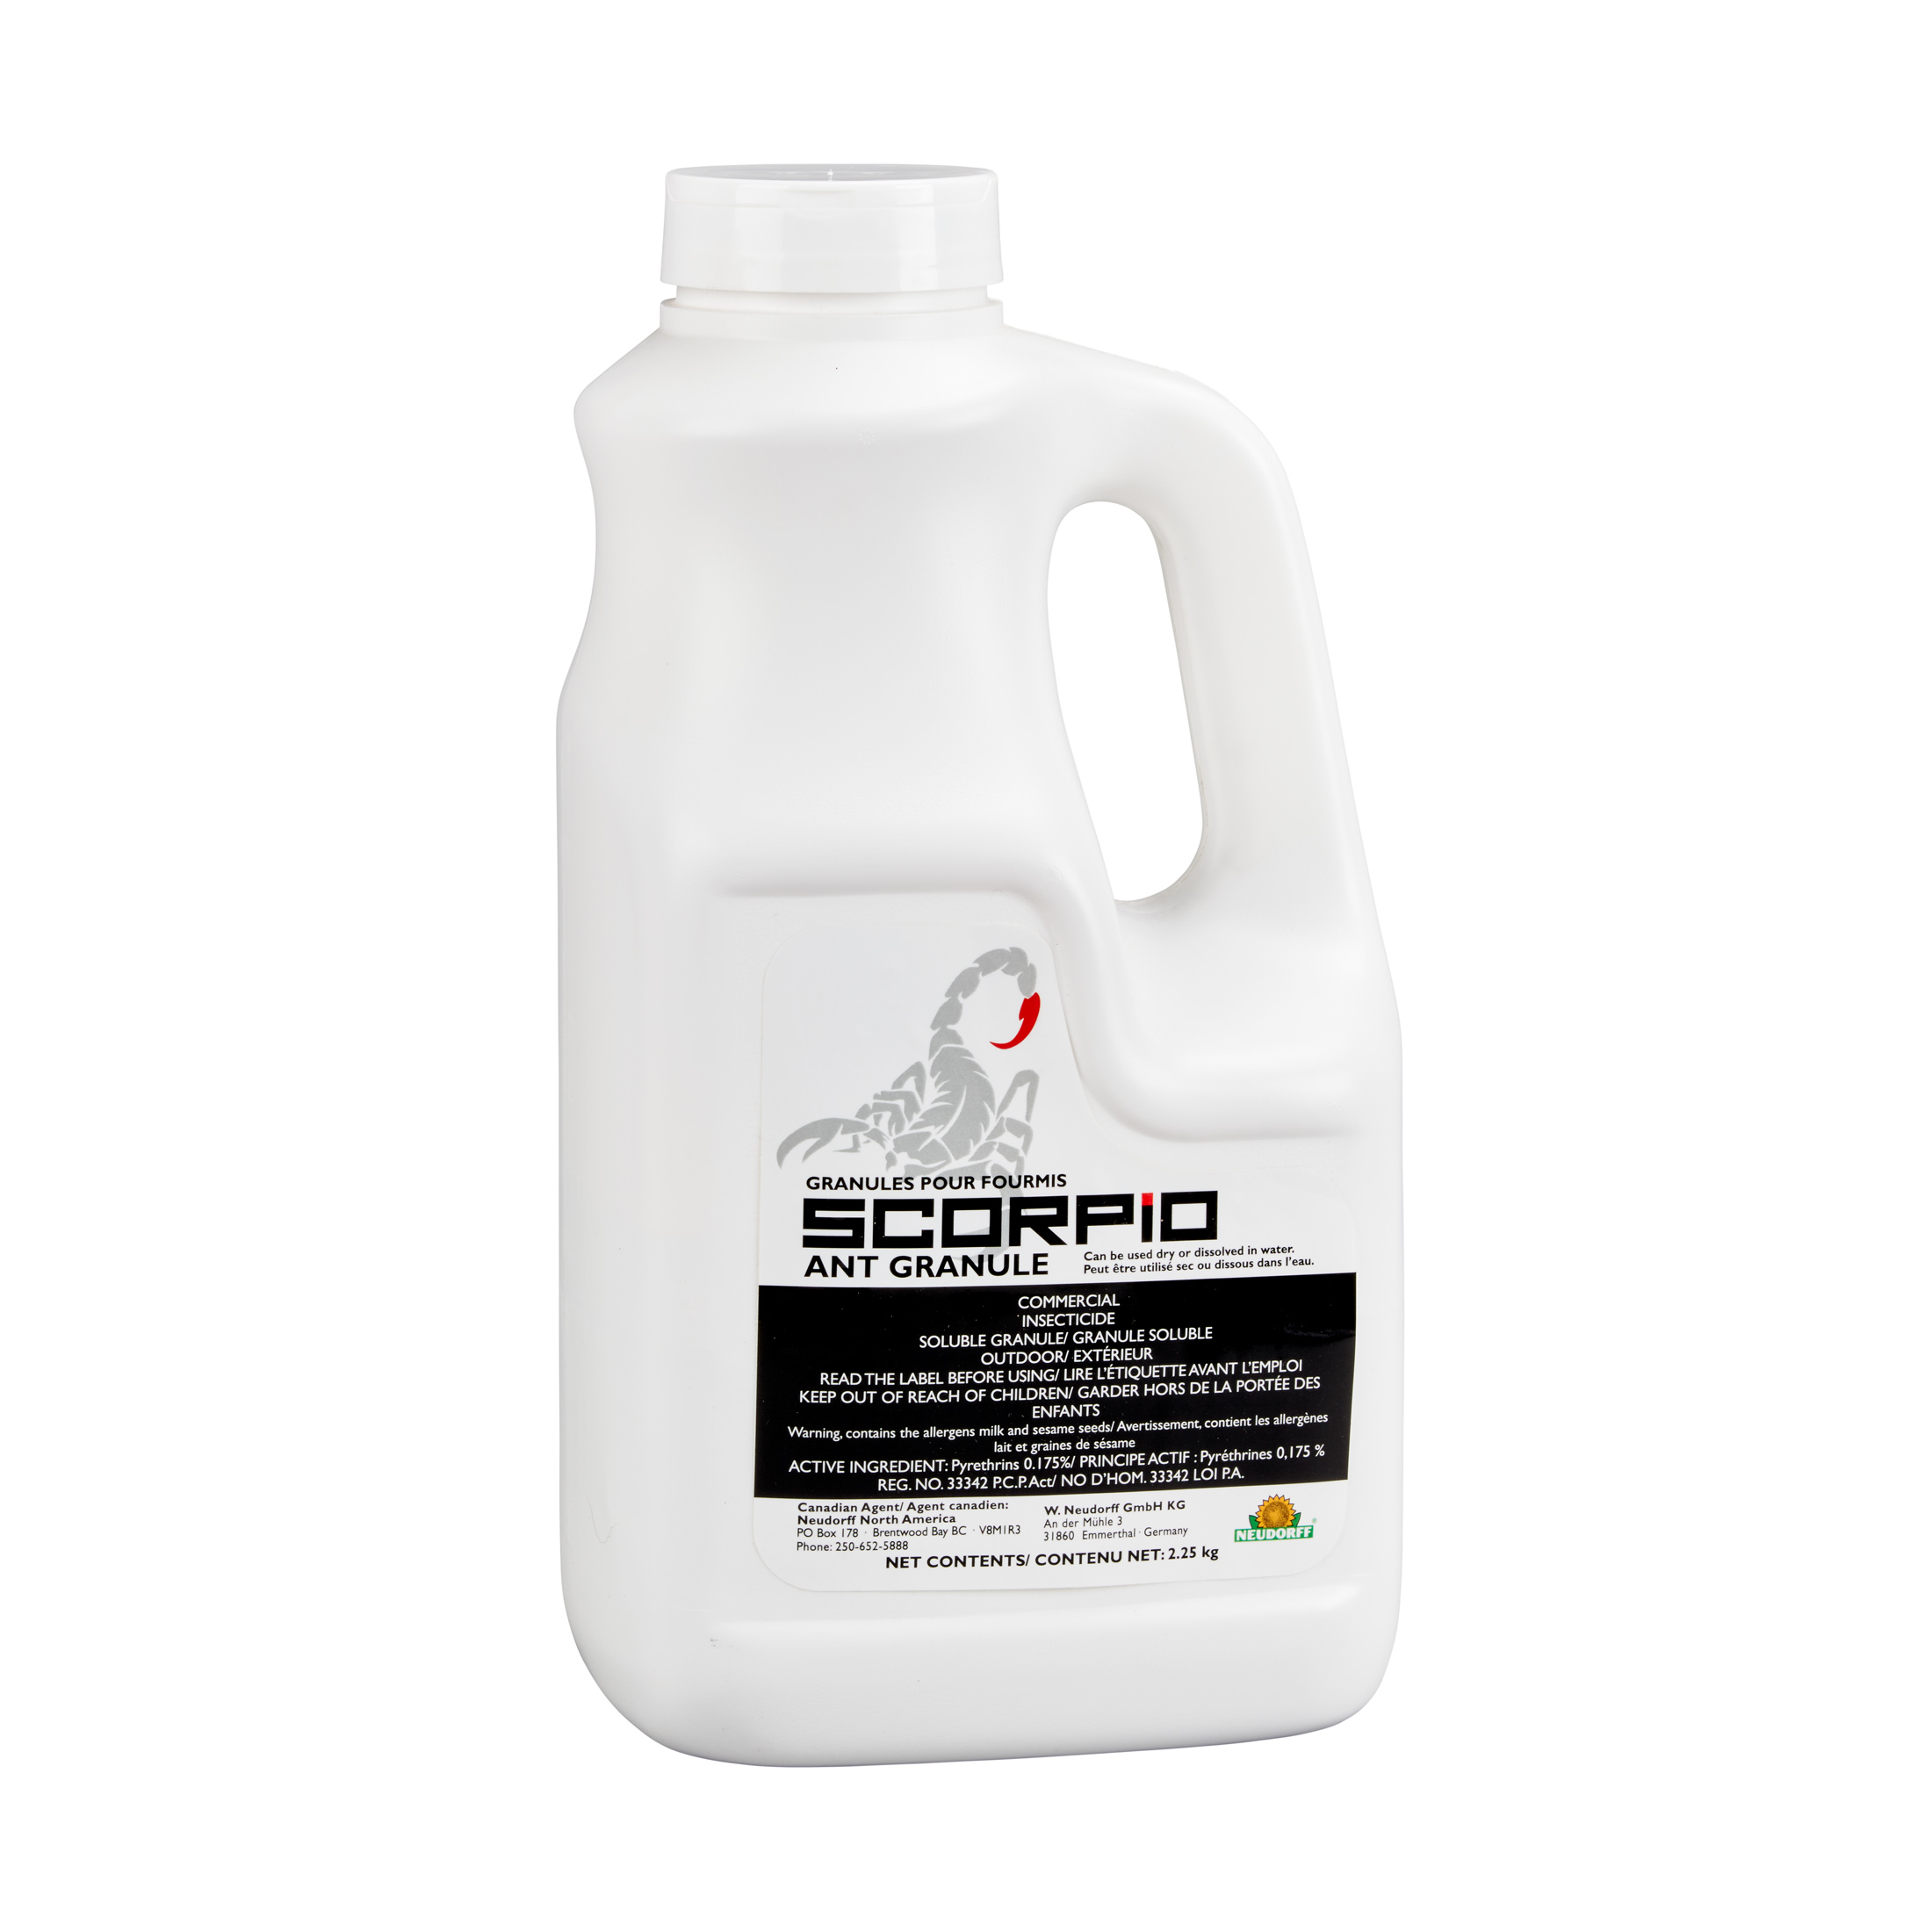 Scorpio Ant Granule 2.25 KG Shaker Bottle